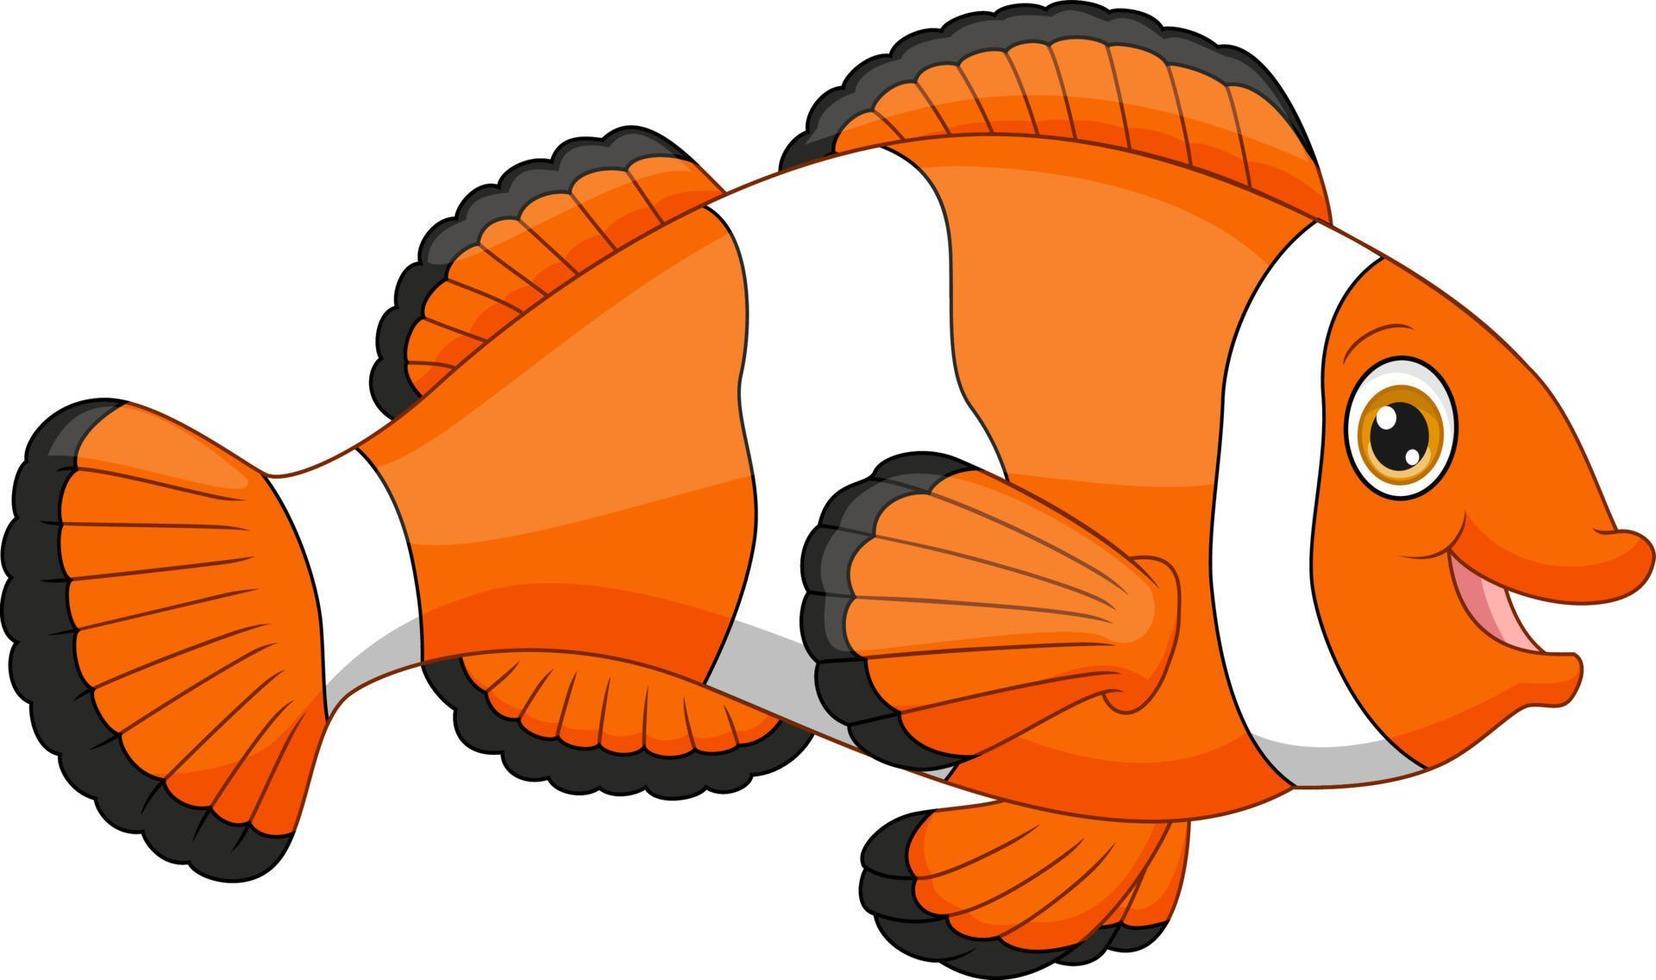 Cartoon happy clown fish on white background vector